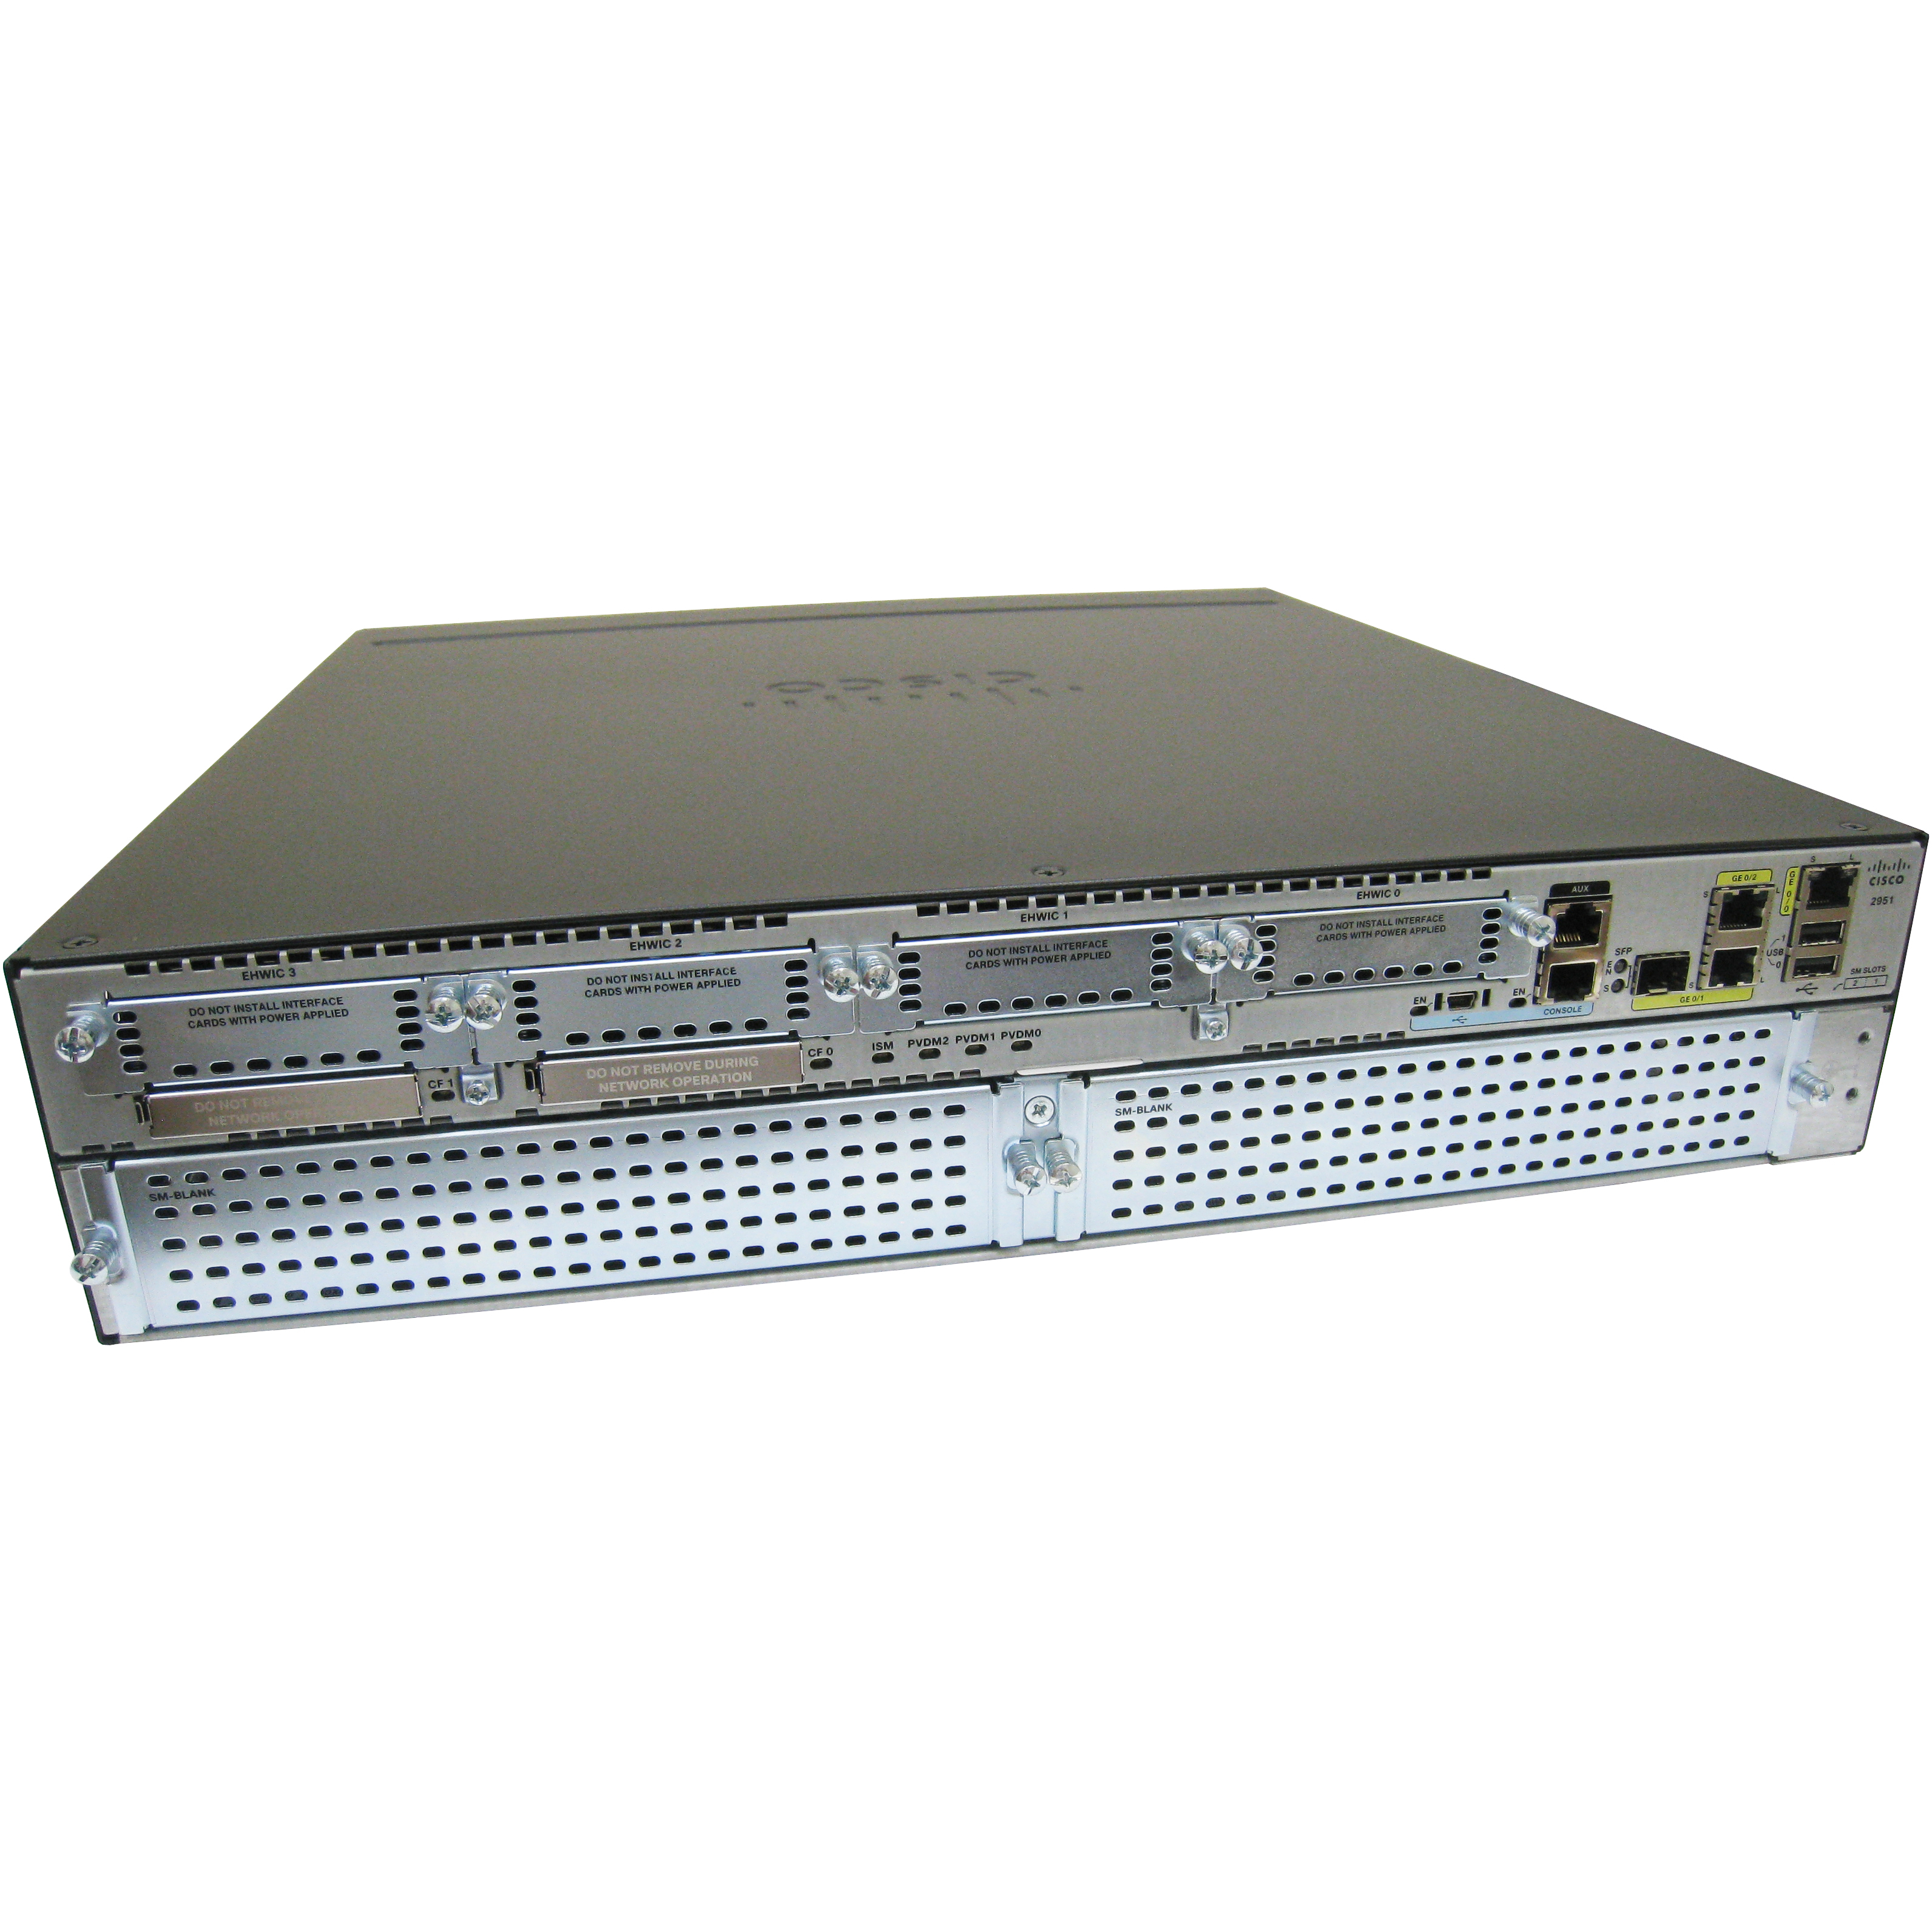 Cisco CISCO2921-HSEC+/K9